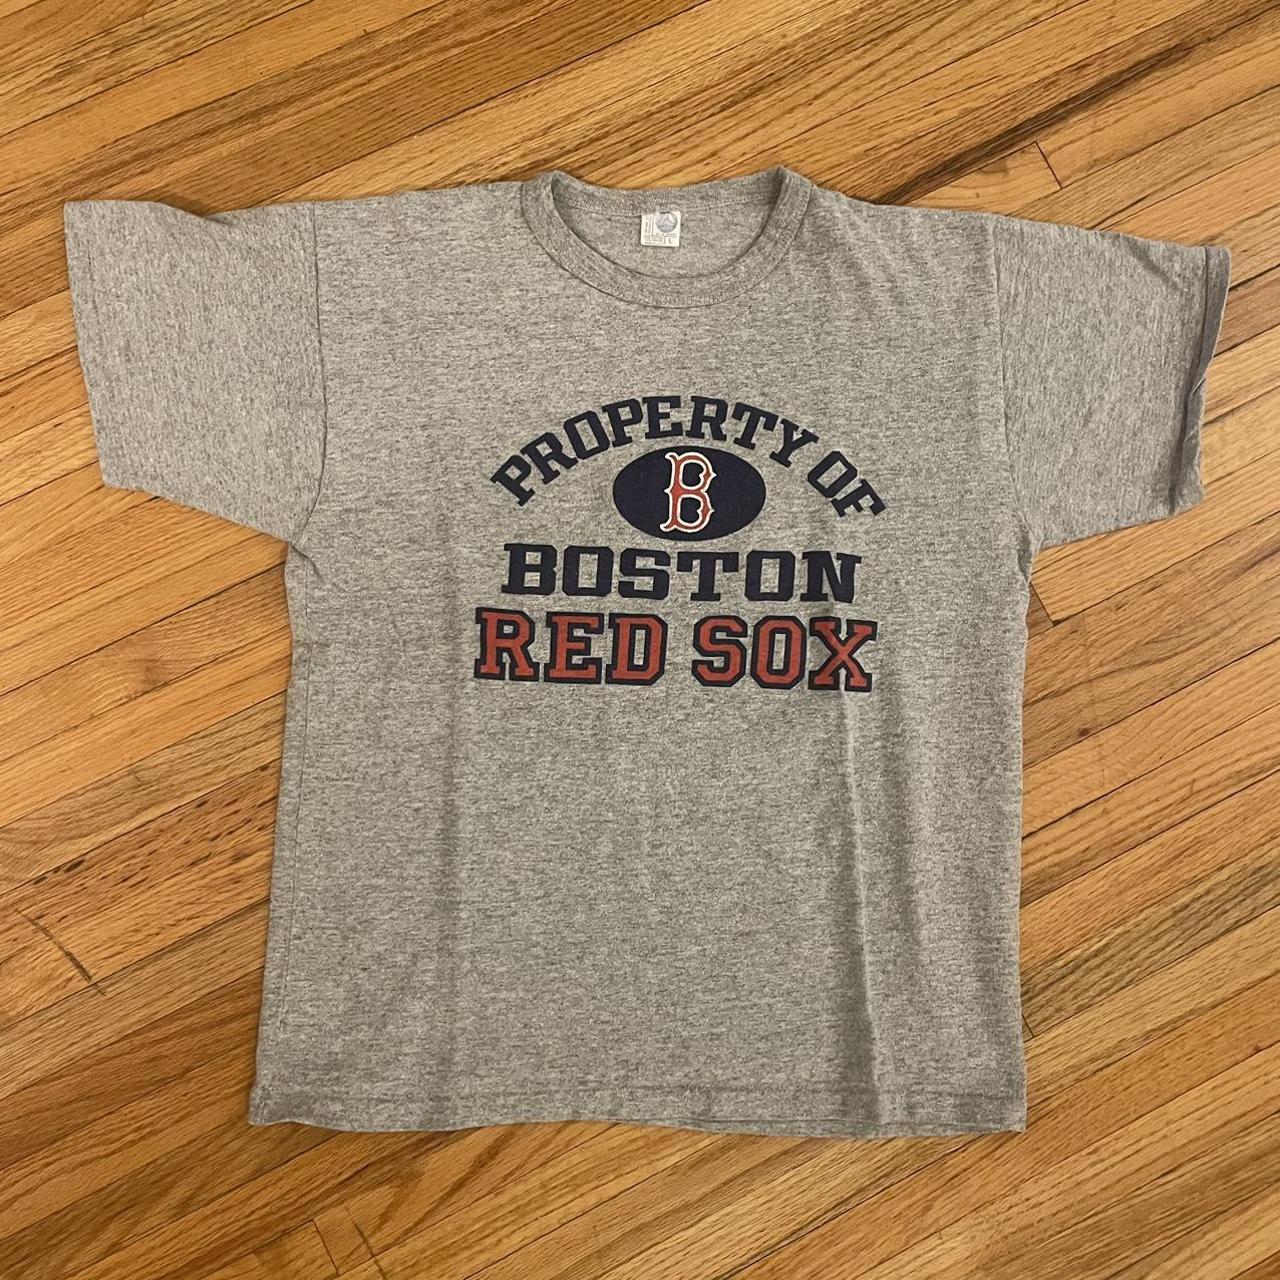 Vintage 80's Boston Red Sox T-Shirt #vintage #80s - Depop